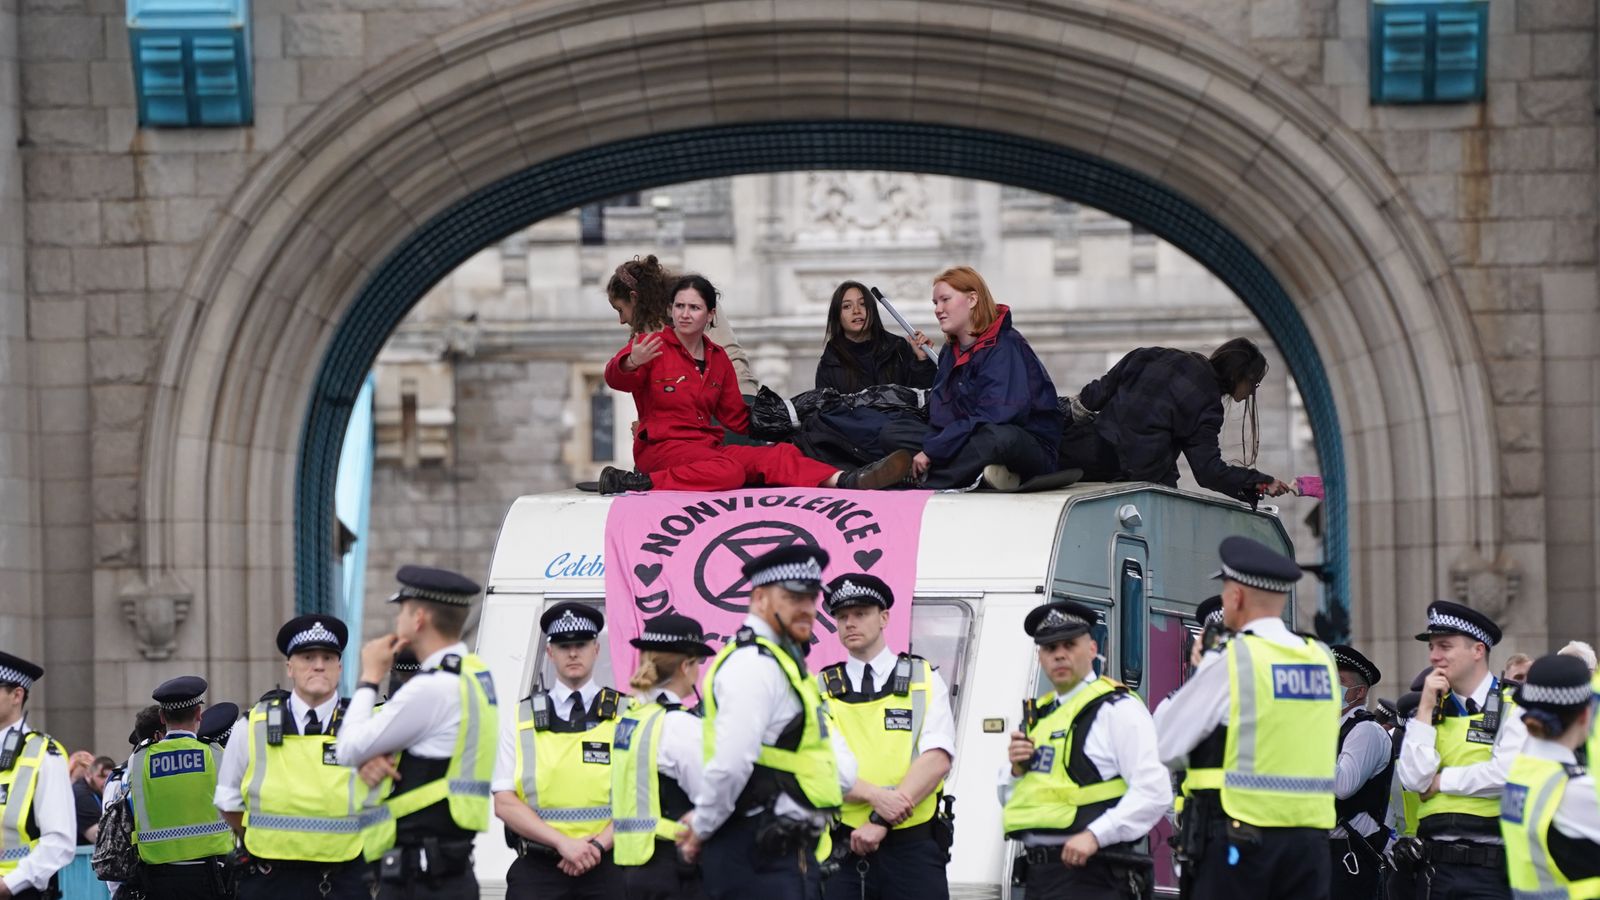 Extinction Rebellion protesters block Tower Bridge with a van and caravan